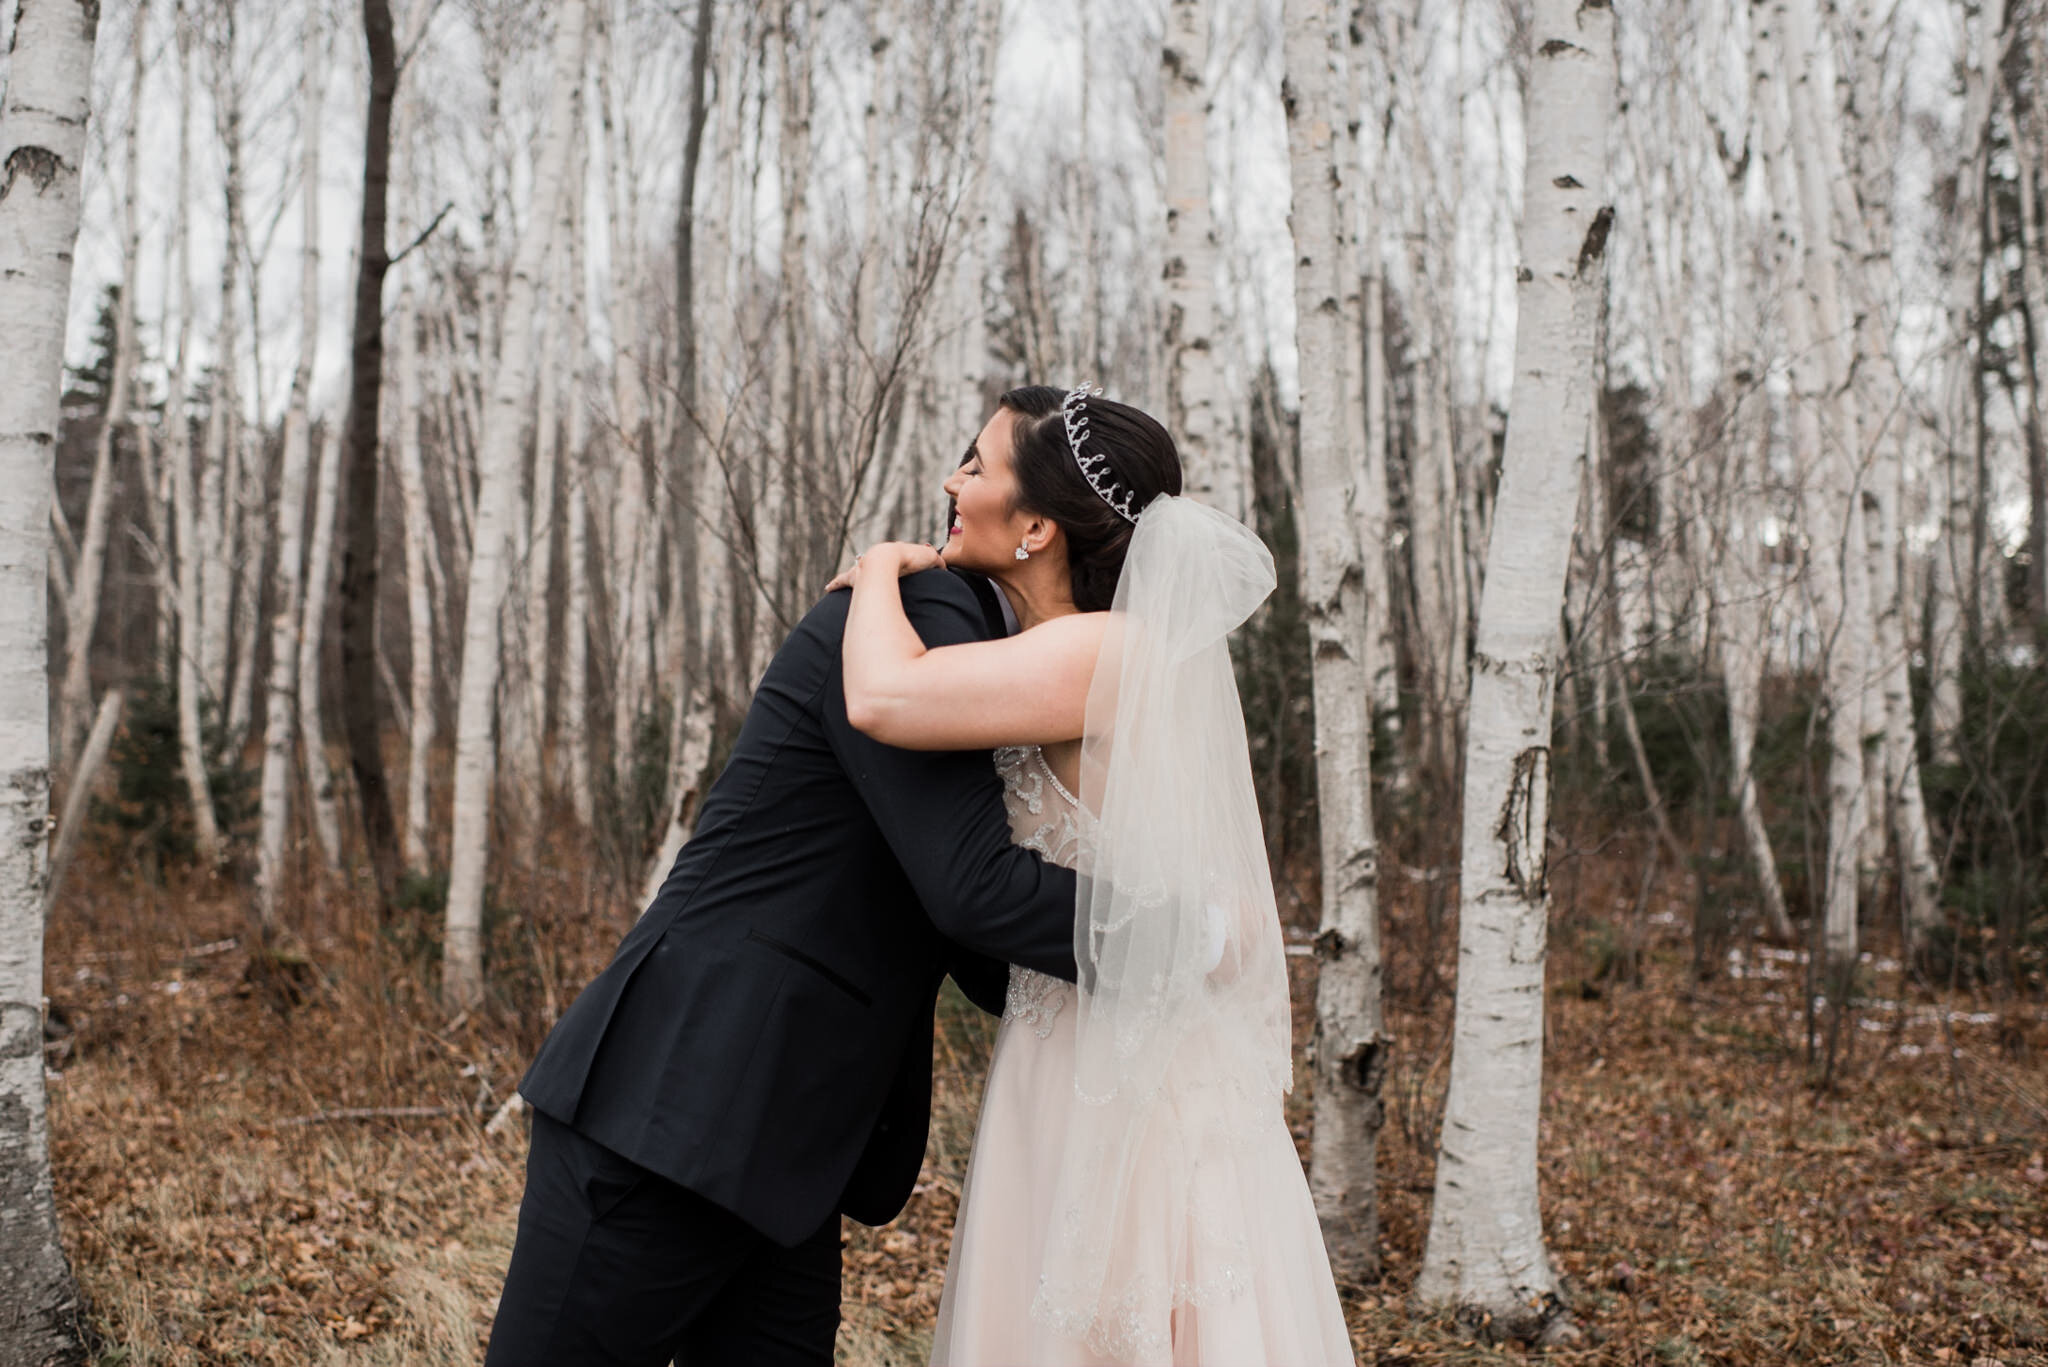 319-first-look-bride-groom-winter-birch-trees-wedding-photographer-toronto-ontario.jpg